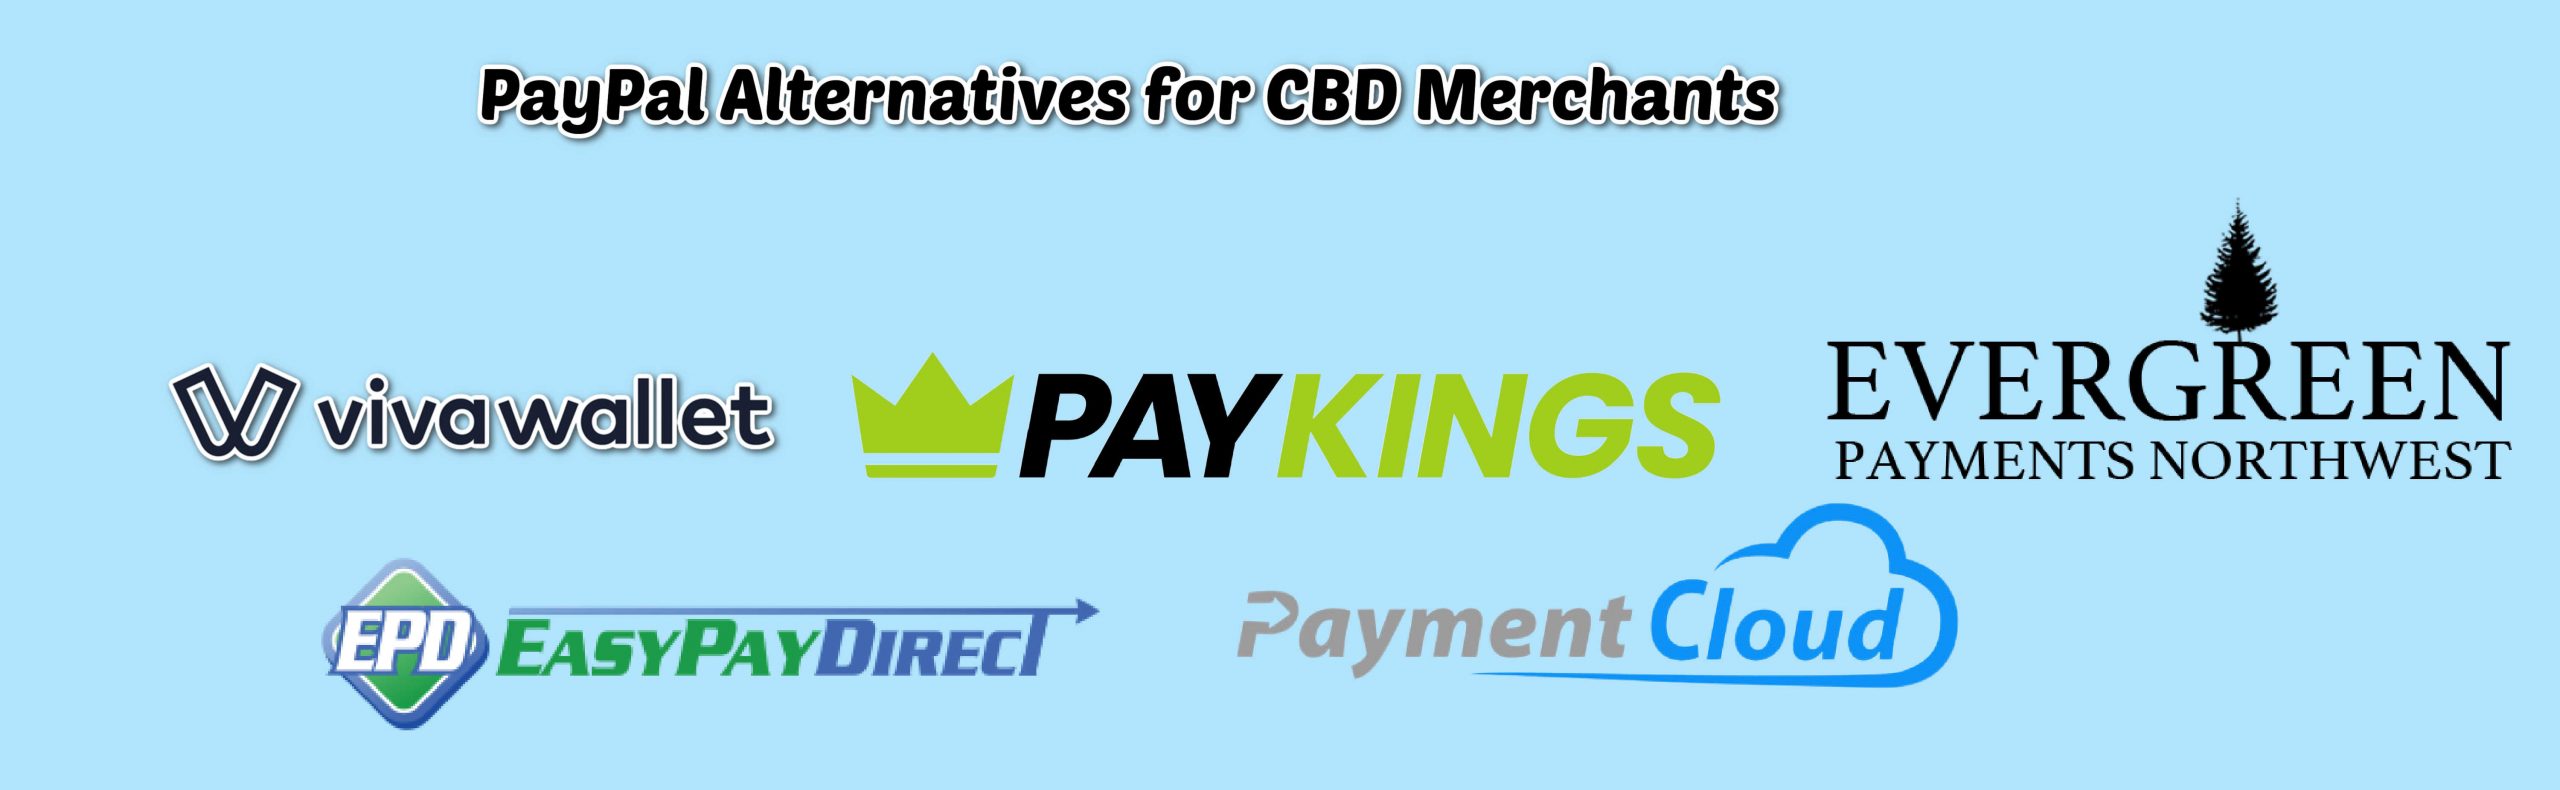 image of paypal alternatives for cbd merchants